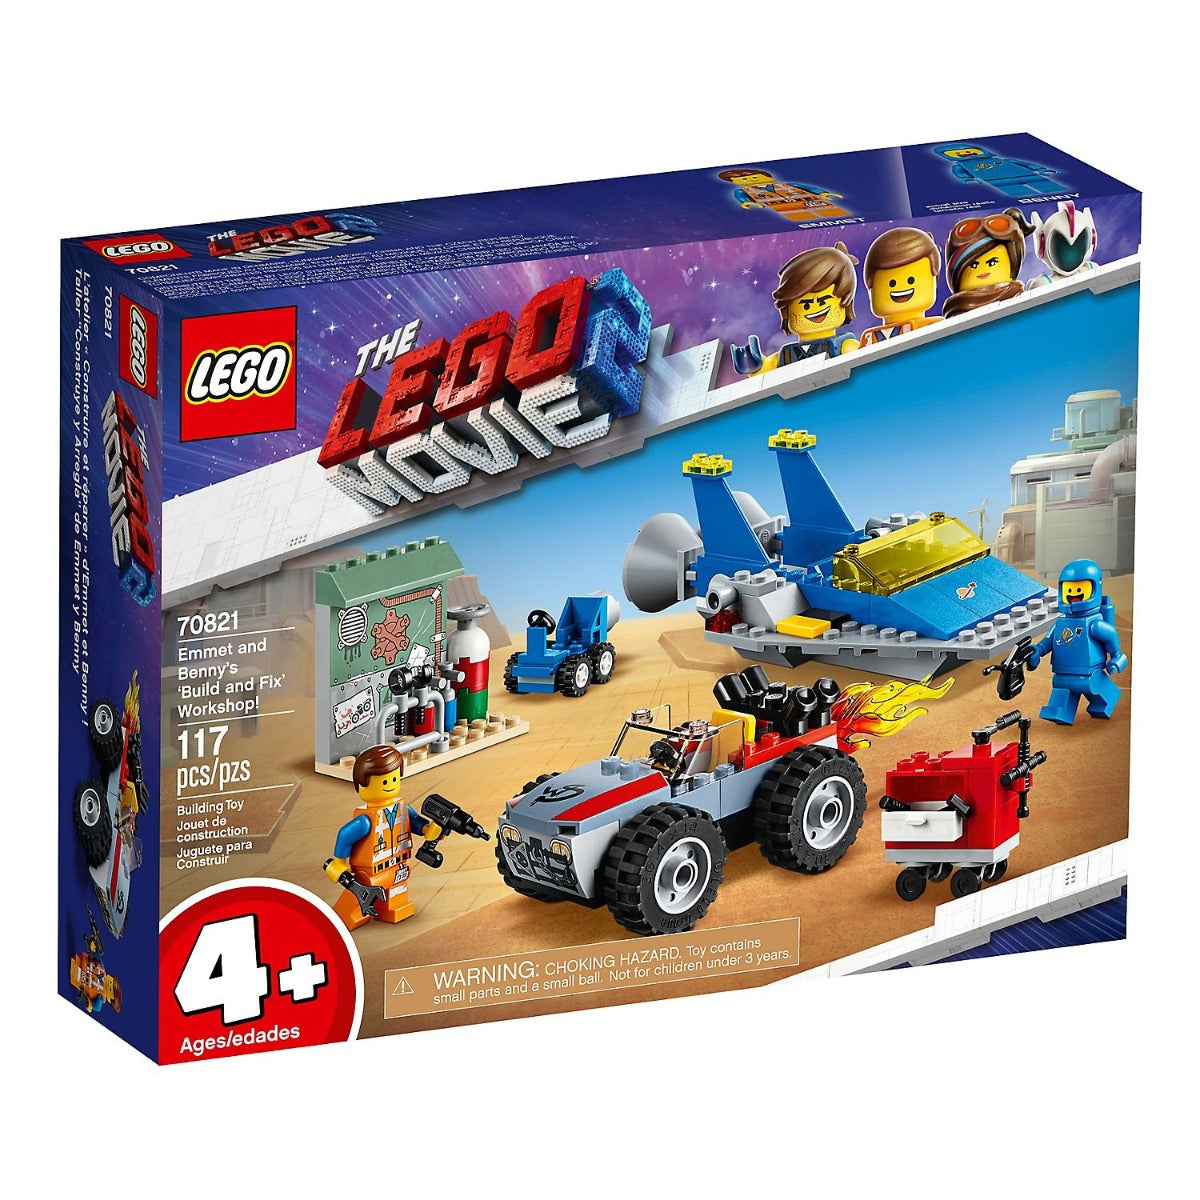 Lego Movie 2 Emmet & Benny's 'Build & Fix' Workshop 70821